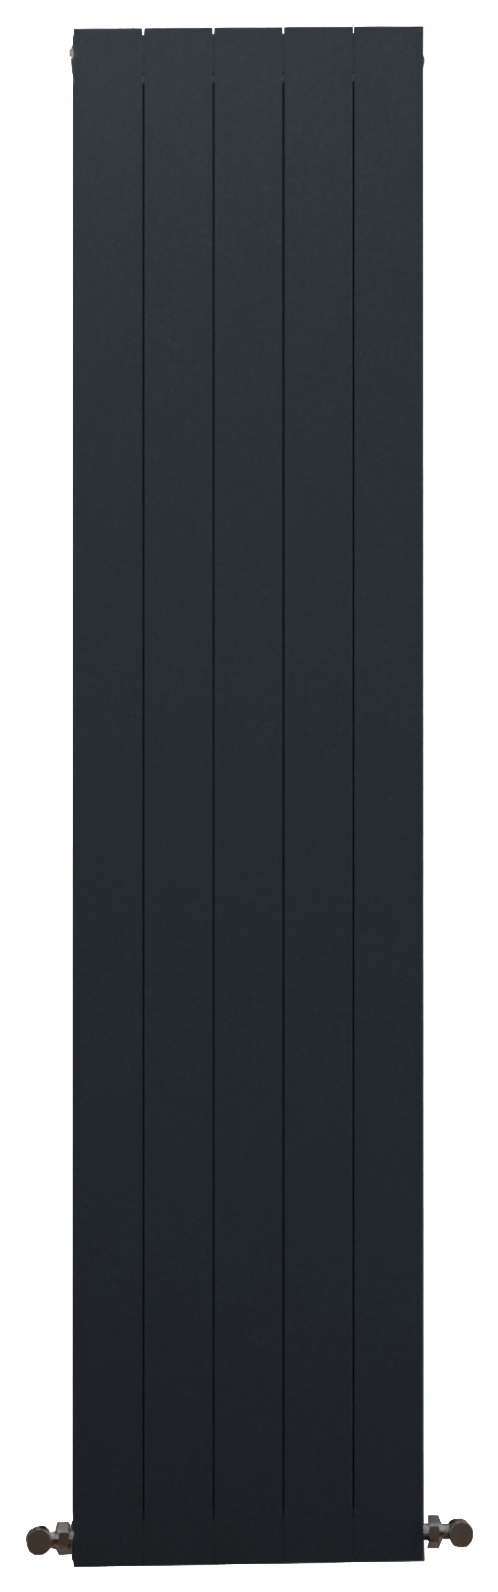 Towelrads Walton Vertical Aluminium Designer Radiator - Black 1800mm - Various Widths Available